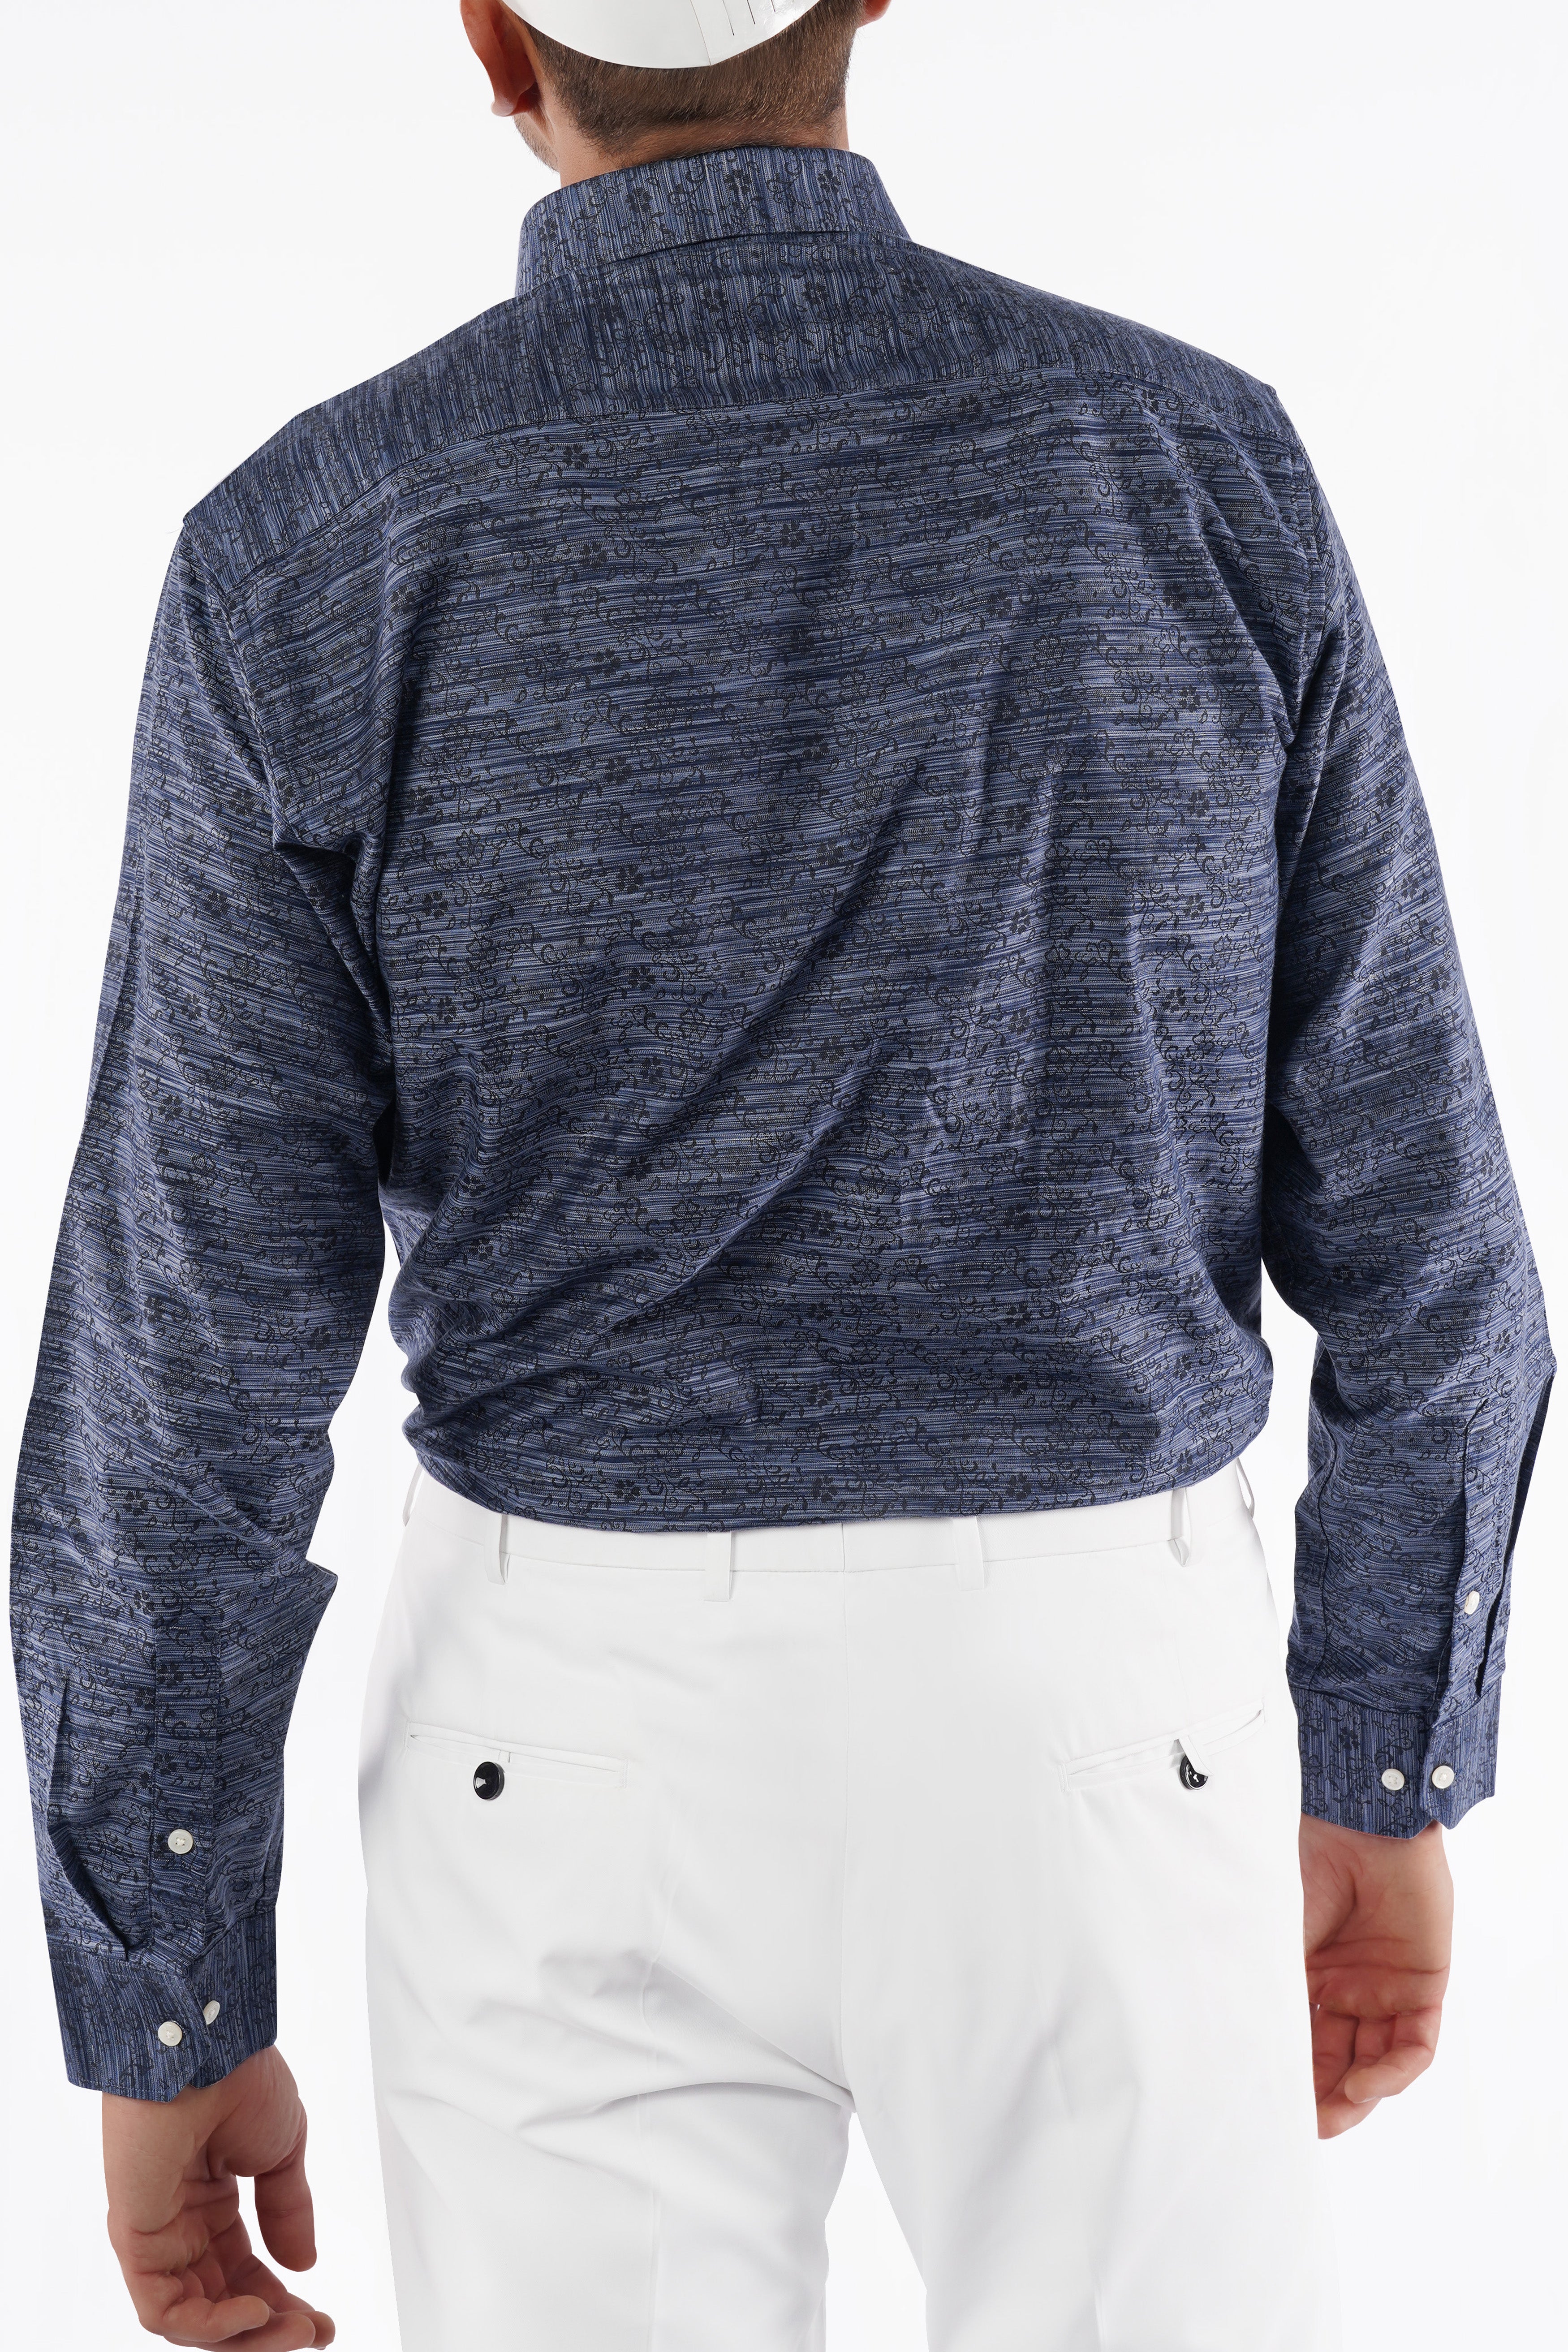 Twilight Blue and Black Jacquard Textured Premium Giza Cotton Shirt